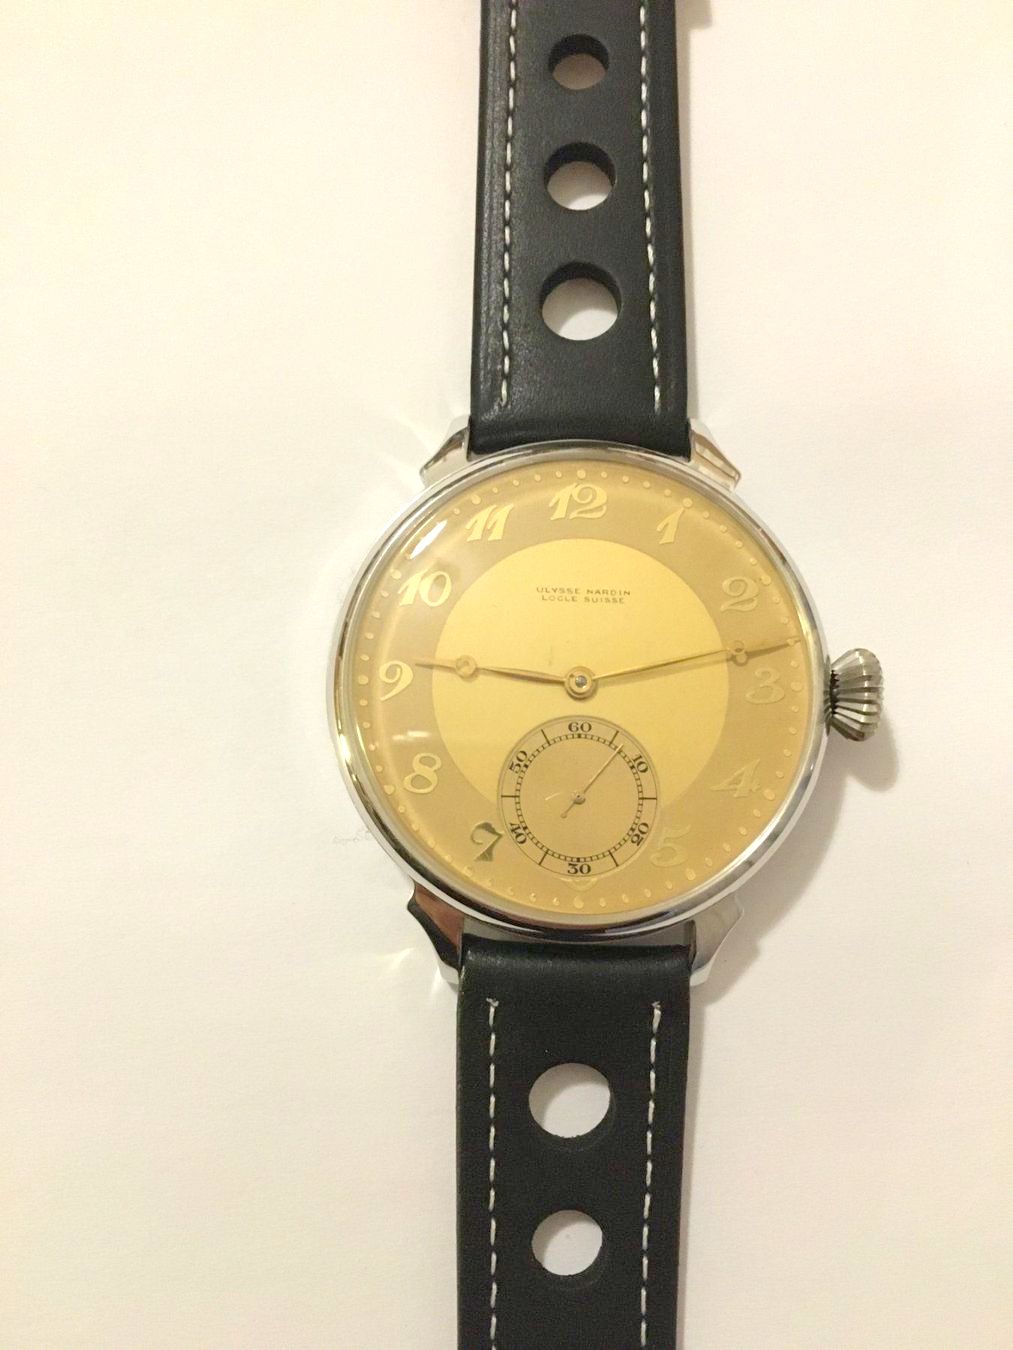 Ulysse Nardin / Locle Suisse Marriage Watch - Gentlemen's Steel Wrist Watch - Image 2 of 4